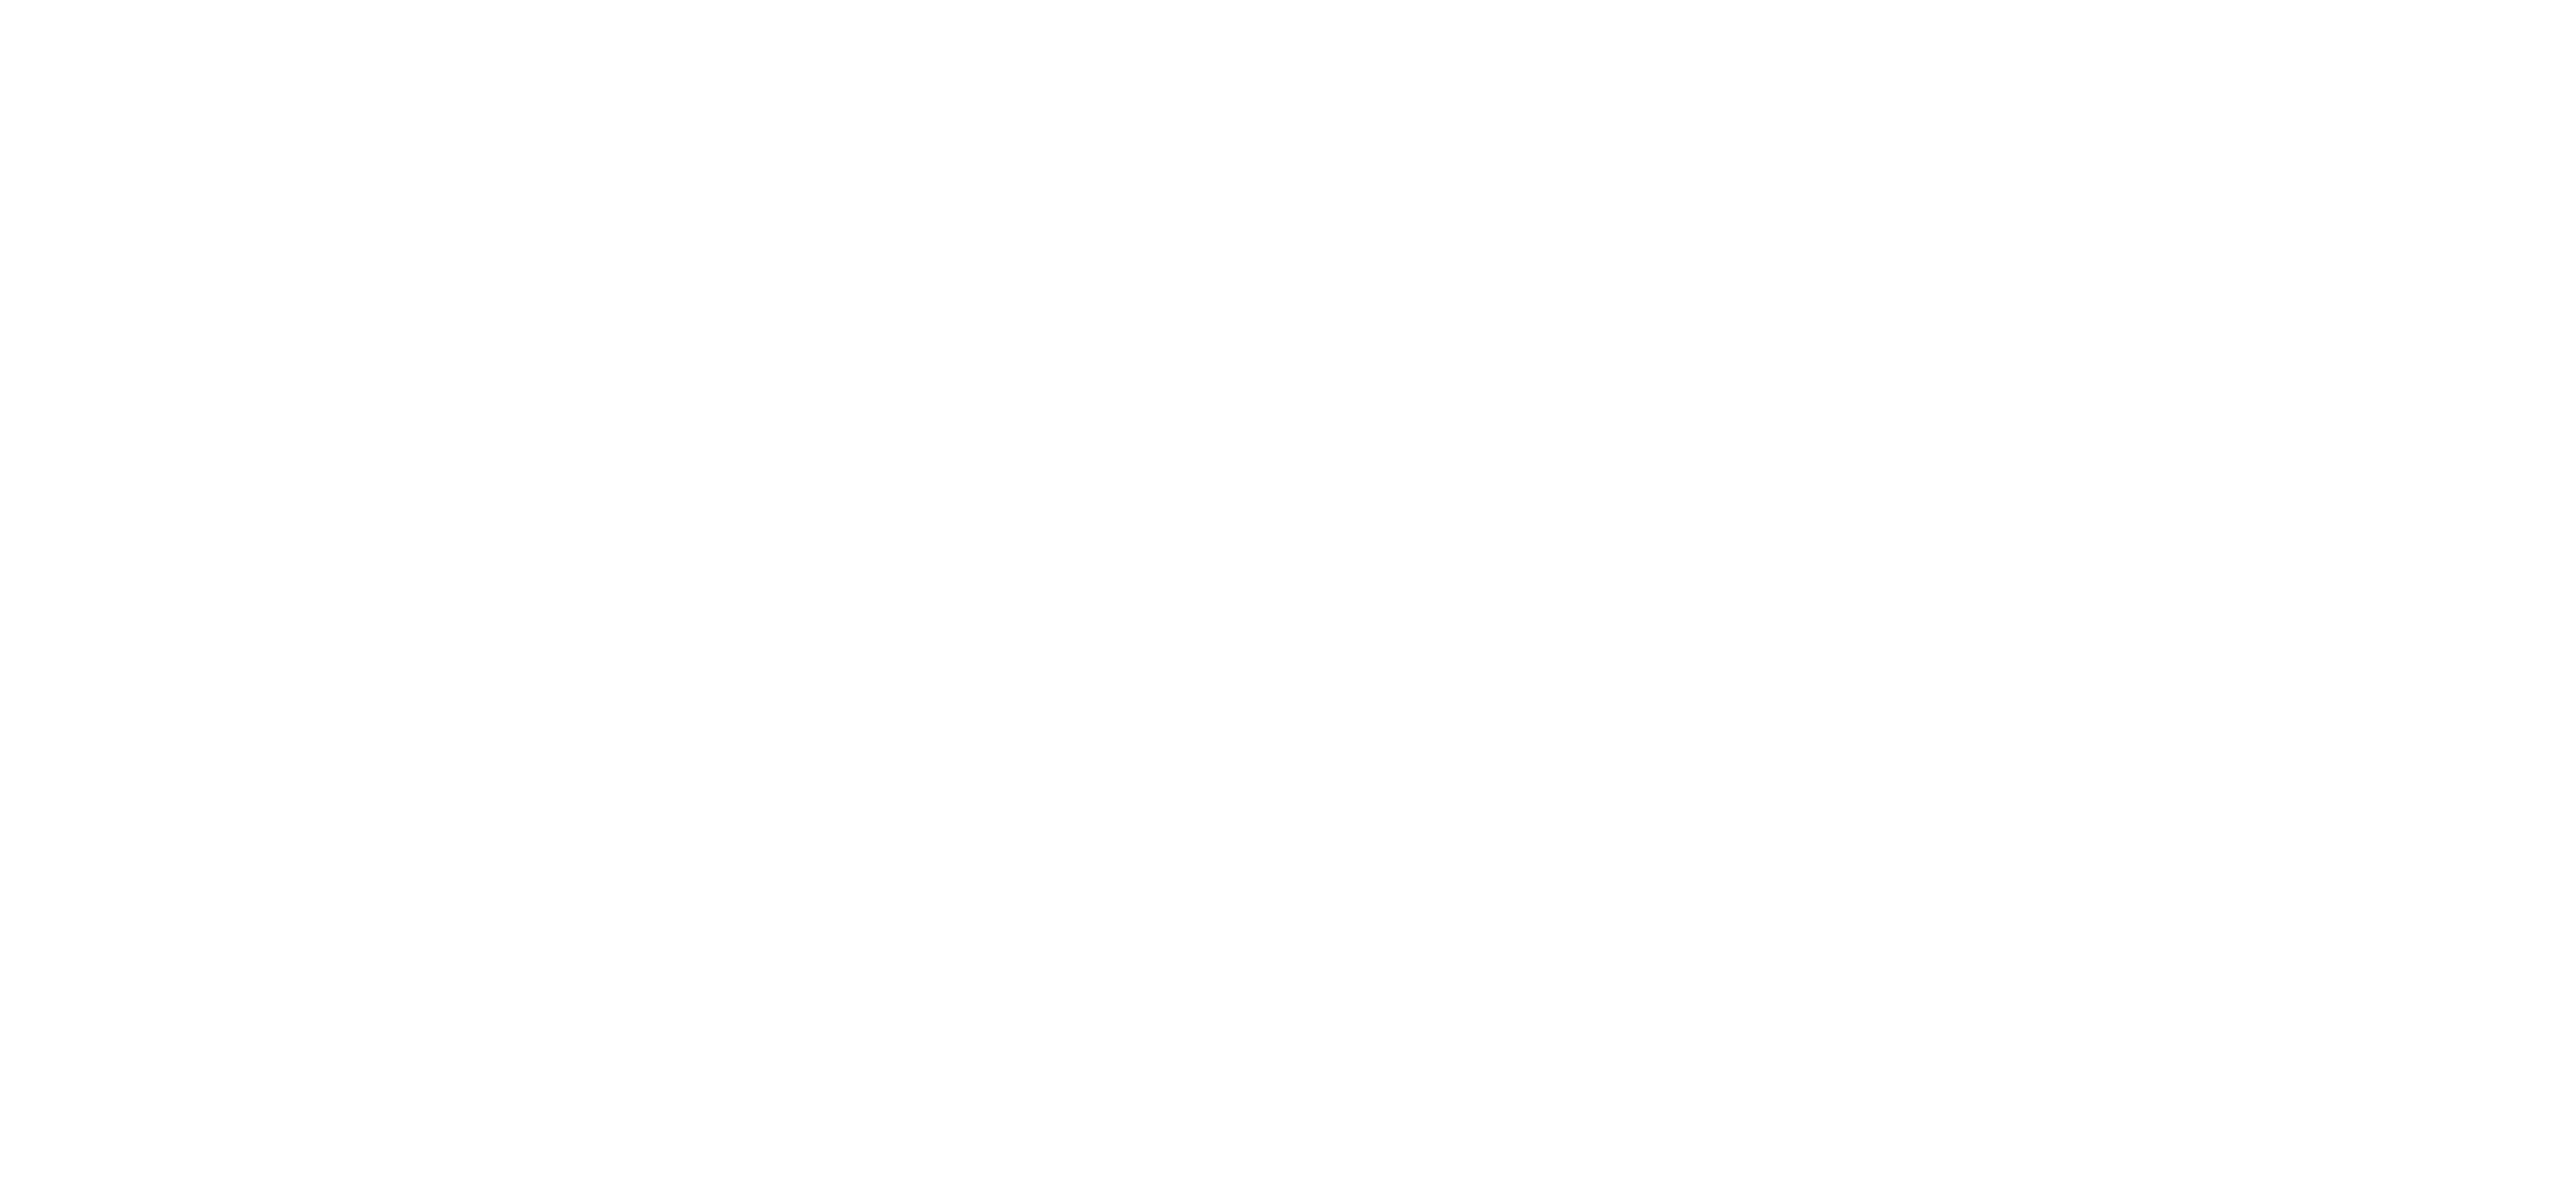 (2022-02-22) GAGER LOGO new1